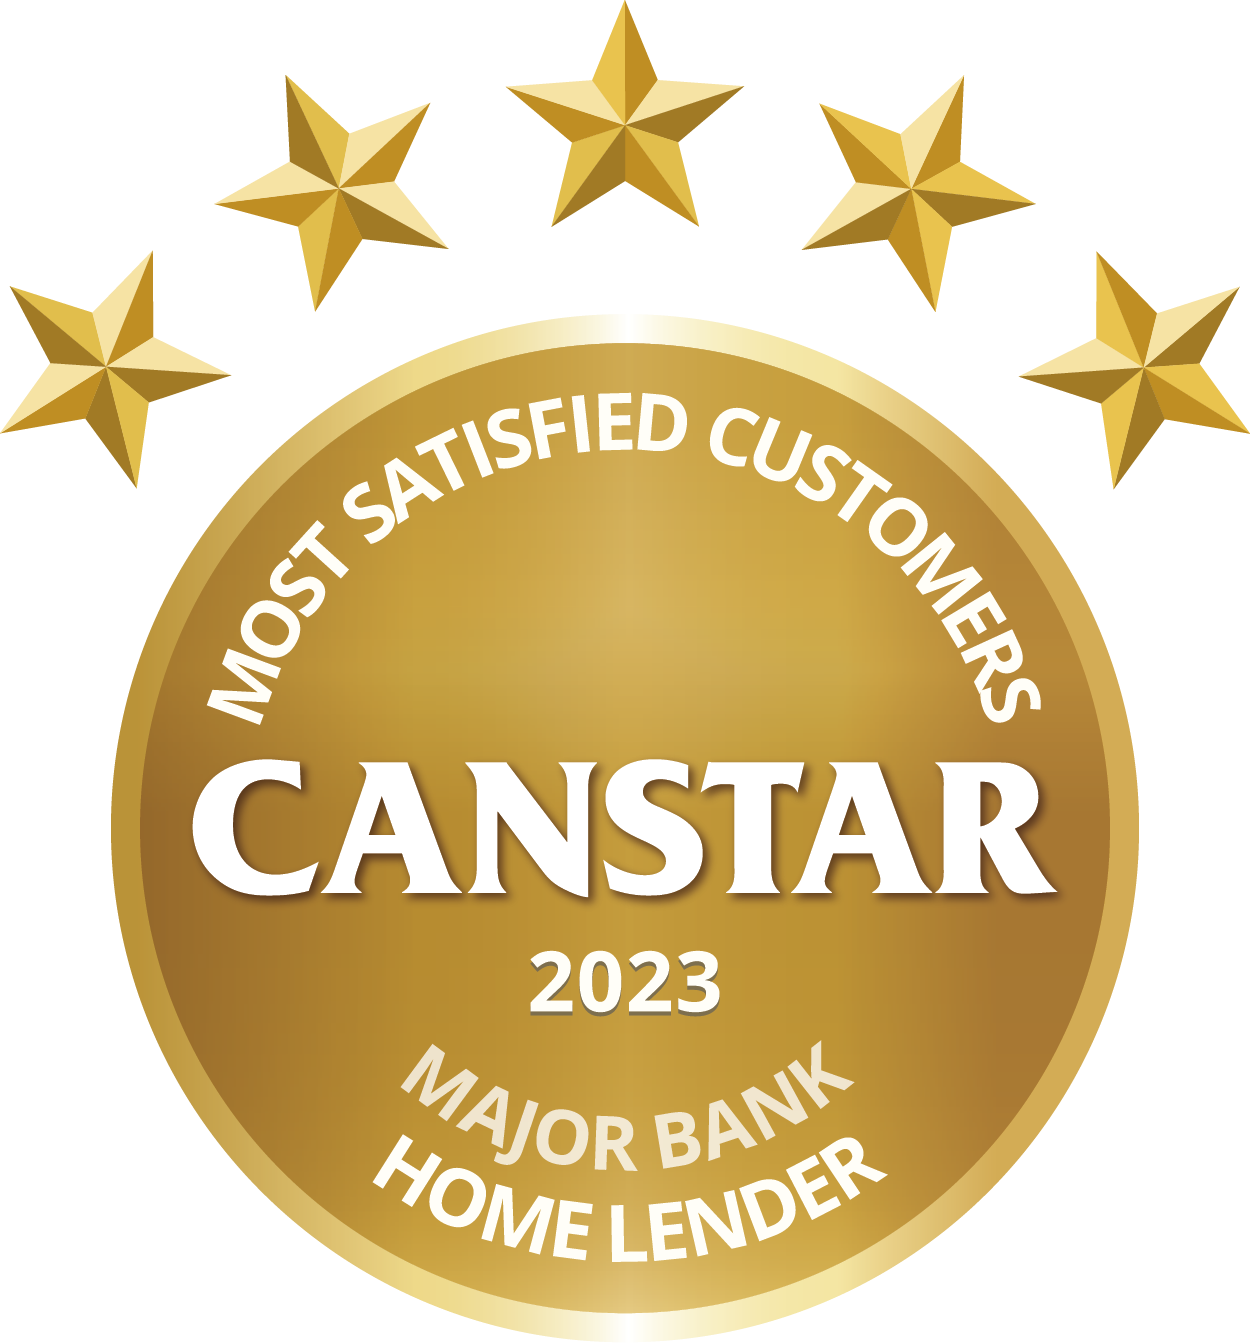 Canstar 2023 logo